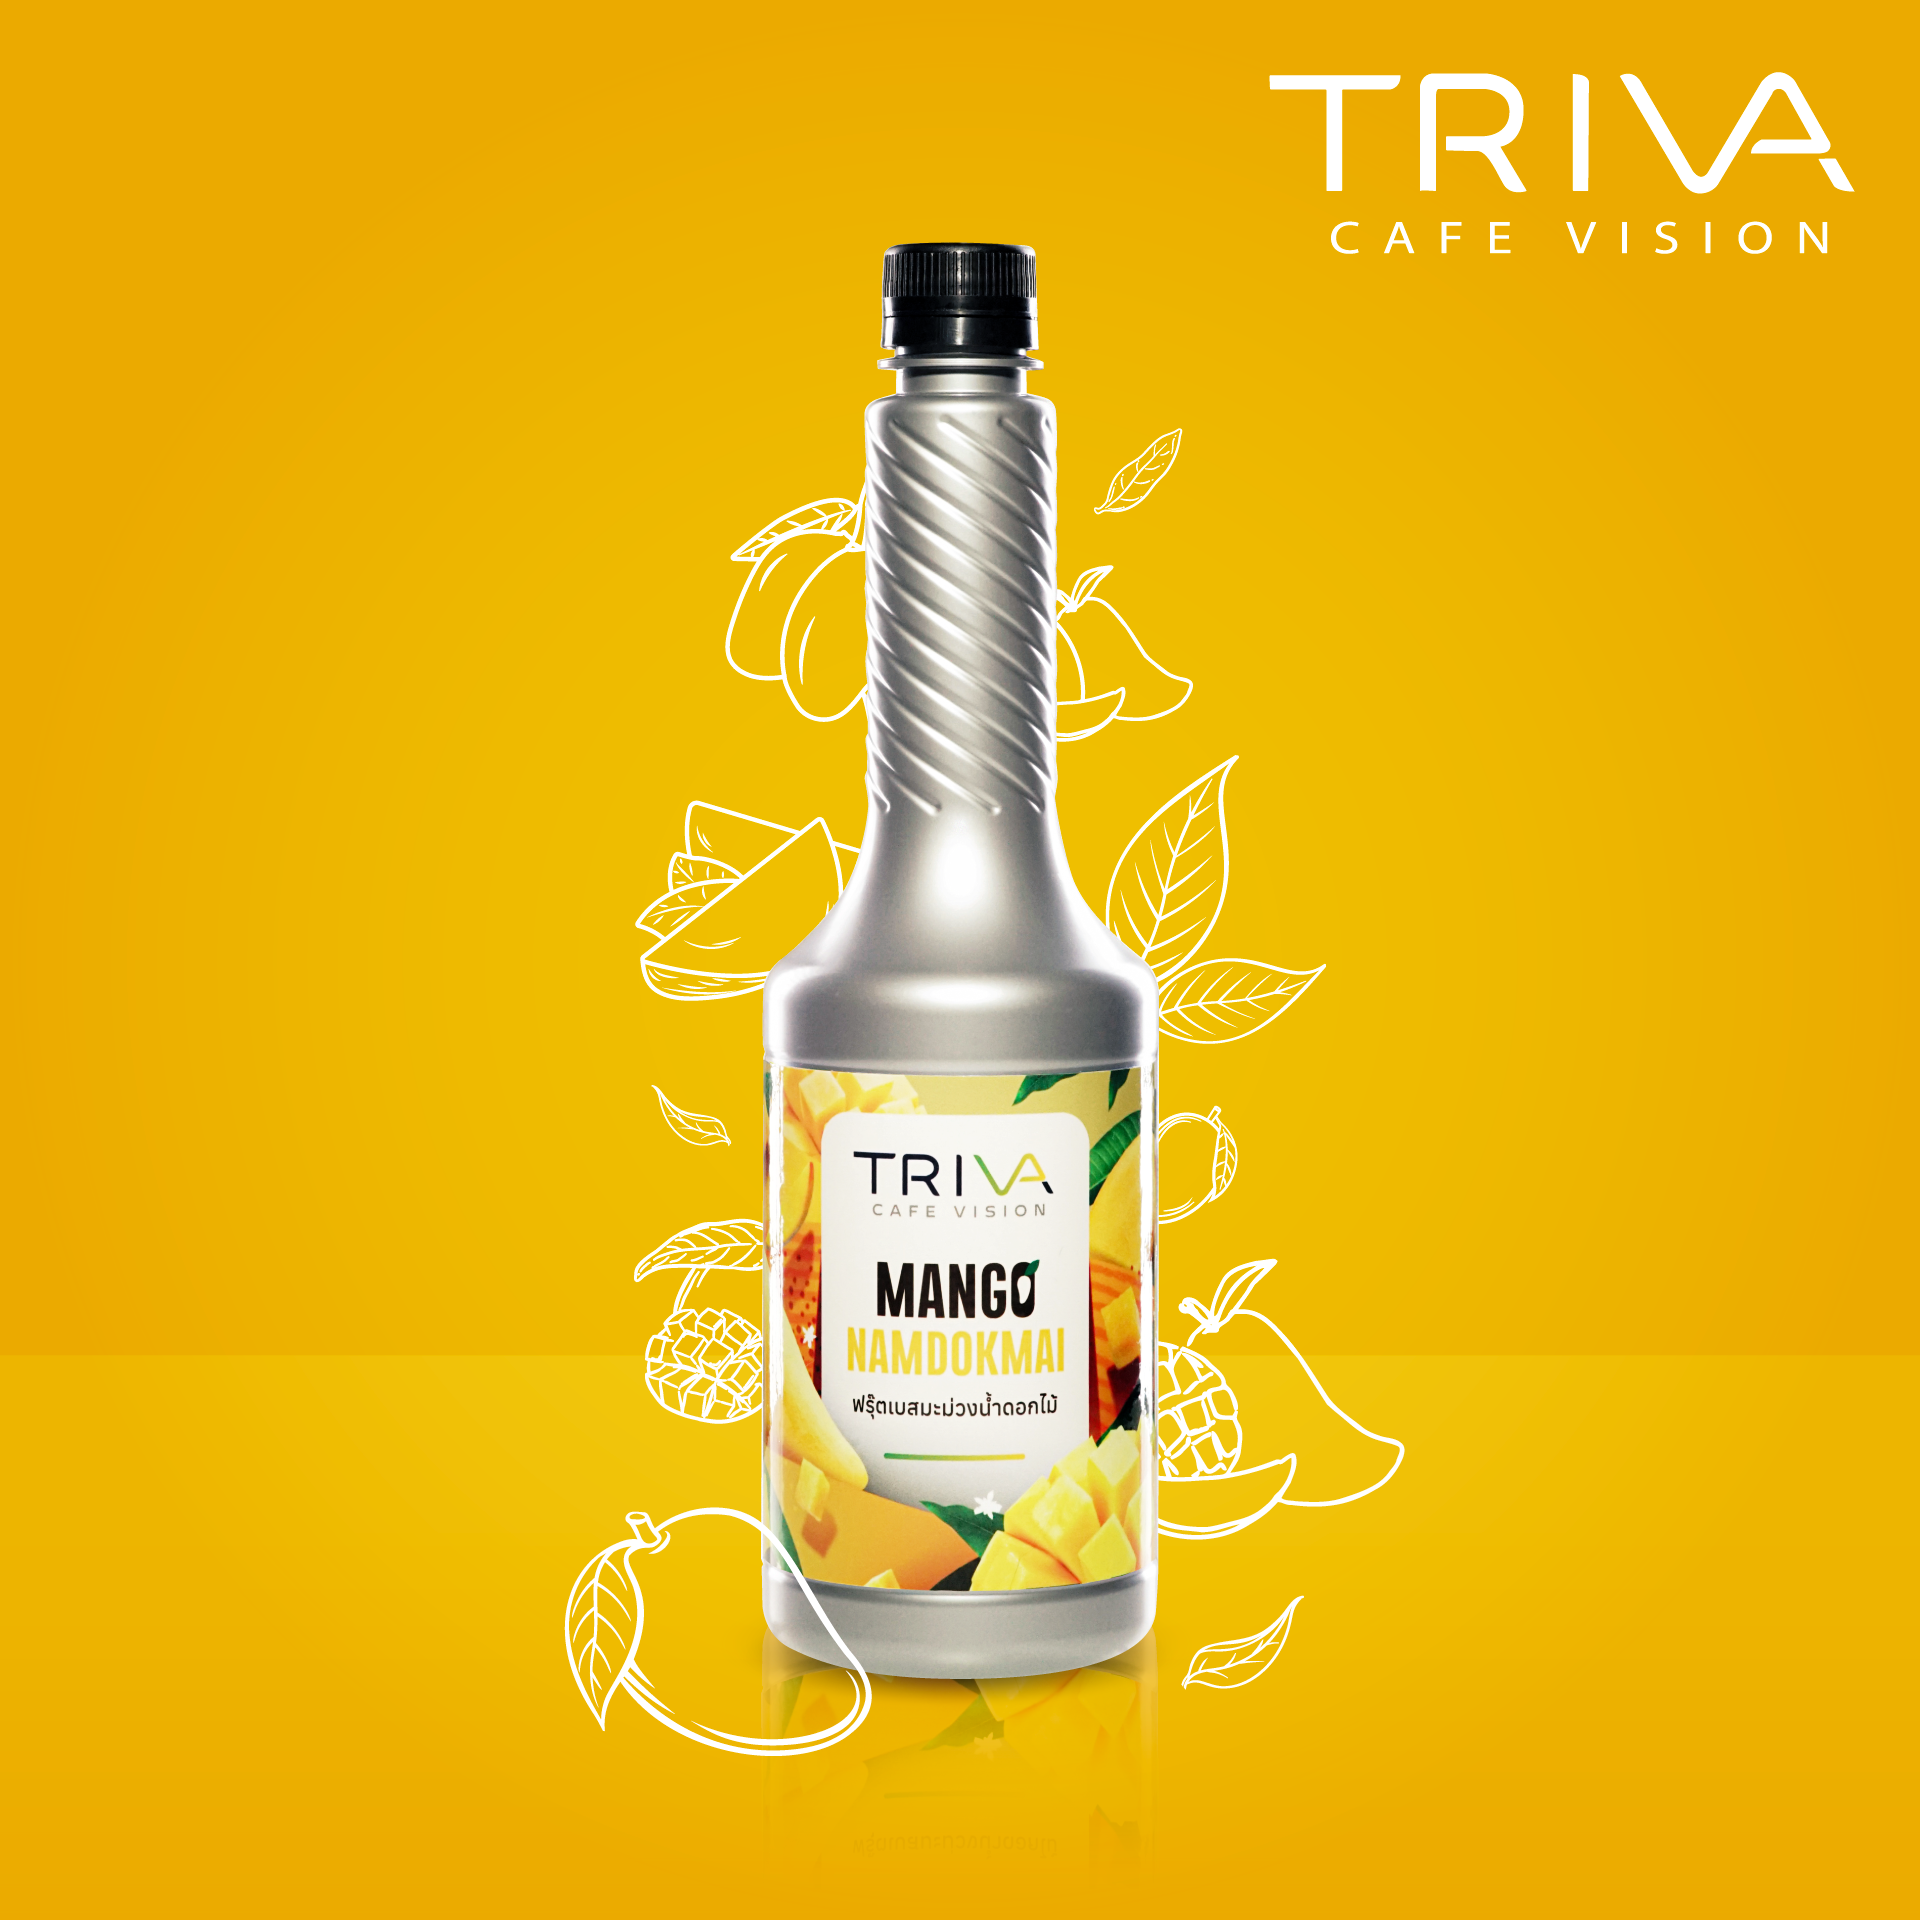 Triva Syrup Fruit Based Namdokmai Mango มะม่วงกลิ่นน้ำดอกไม้ (ผลิตภัณฑ์สมูทตี้และแต่งหน้าขนม)